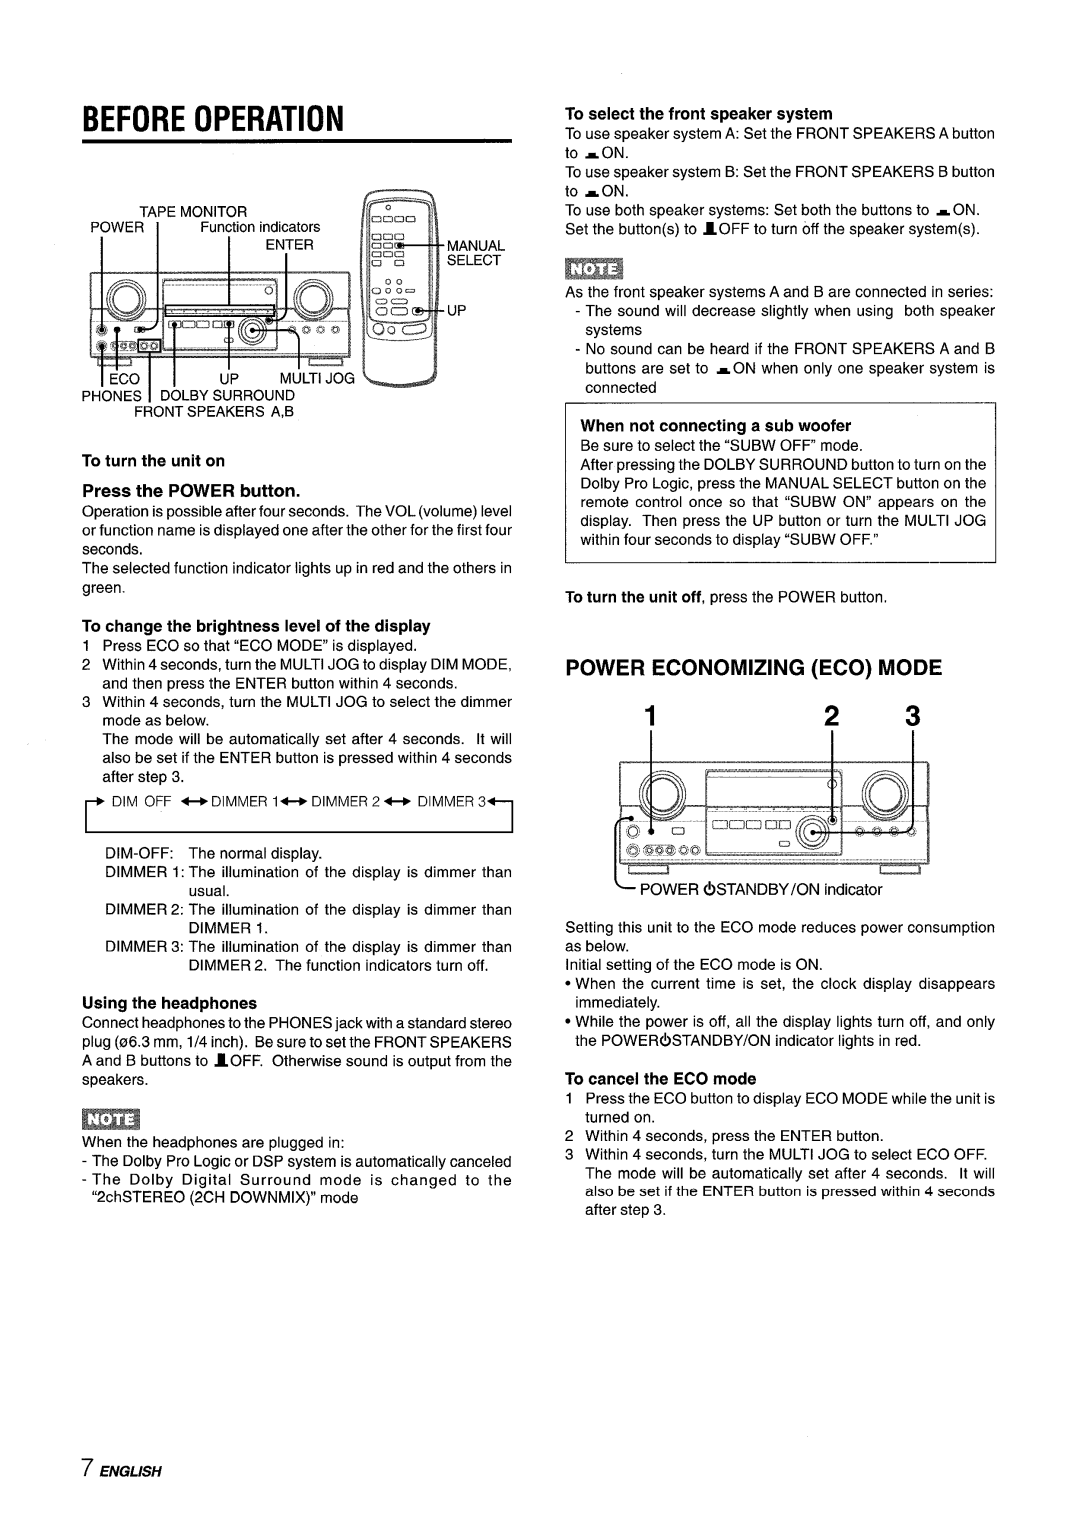 Sony AV-DV75 manual Before Operation, Power Economizing Eco Mode, Press the POWER button, Using the headphones 